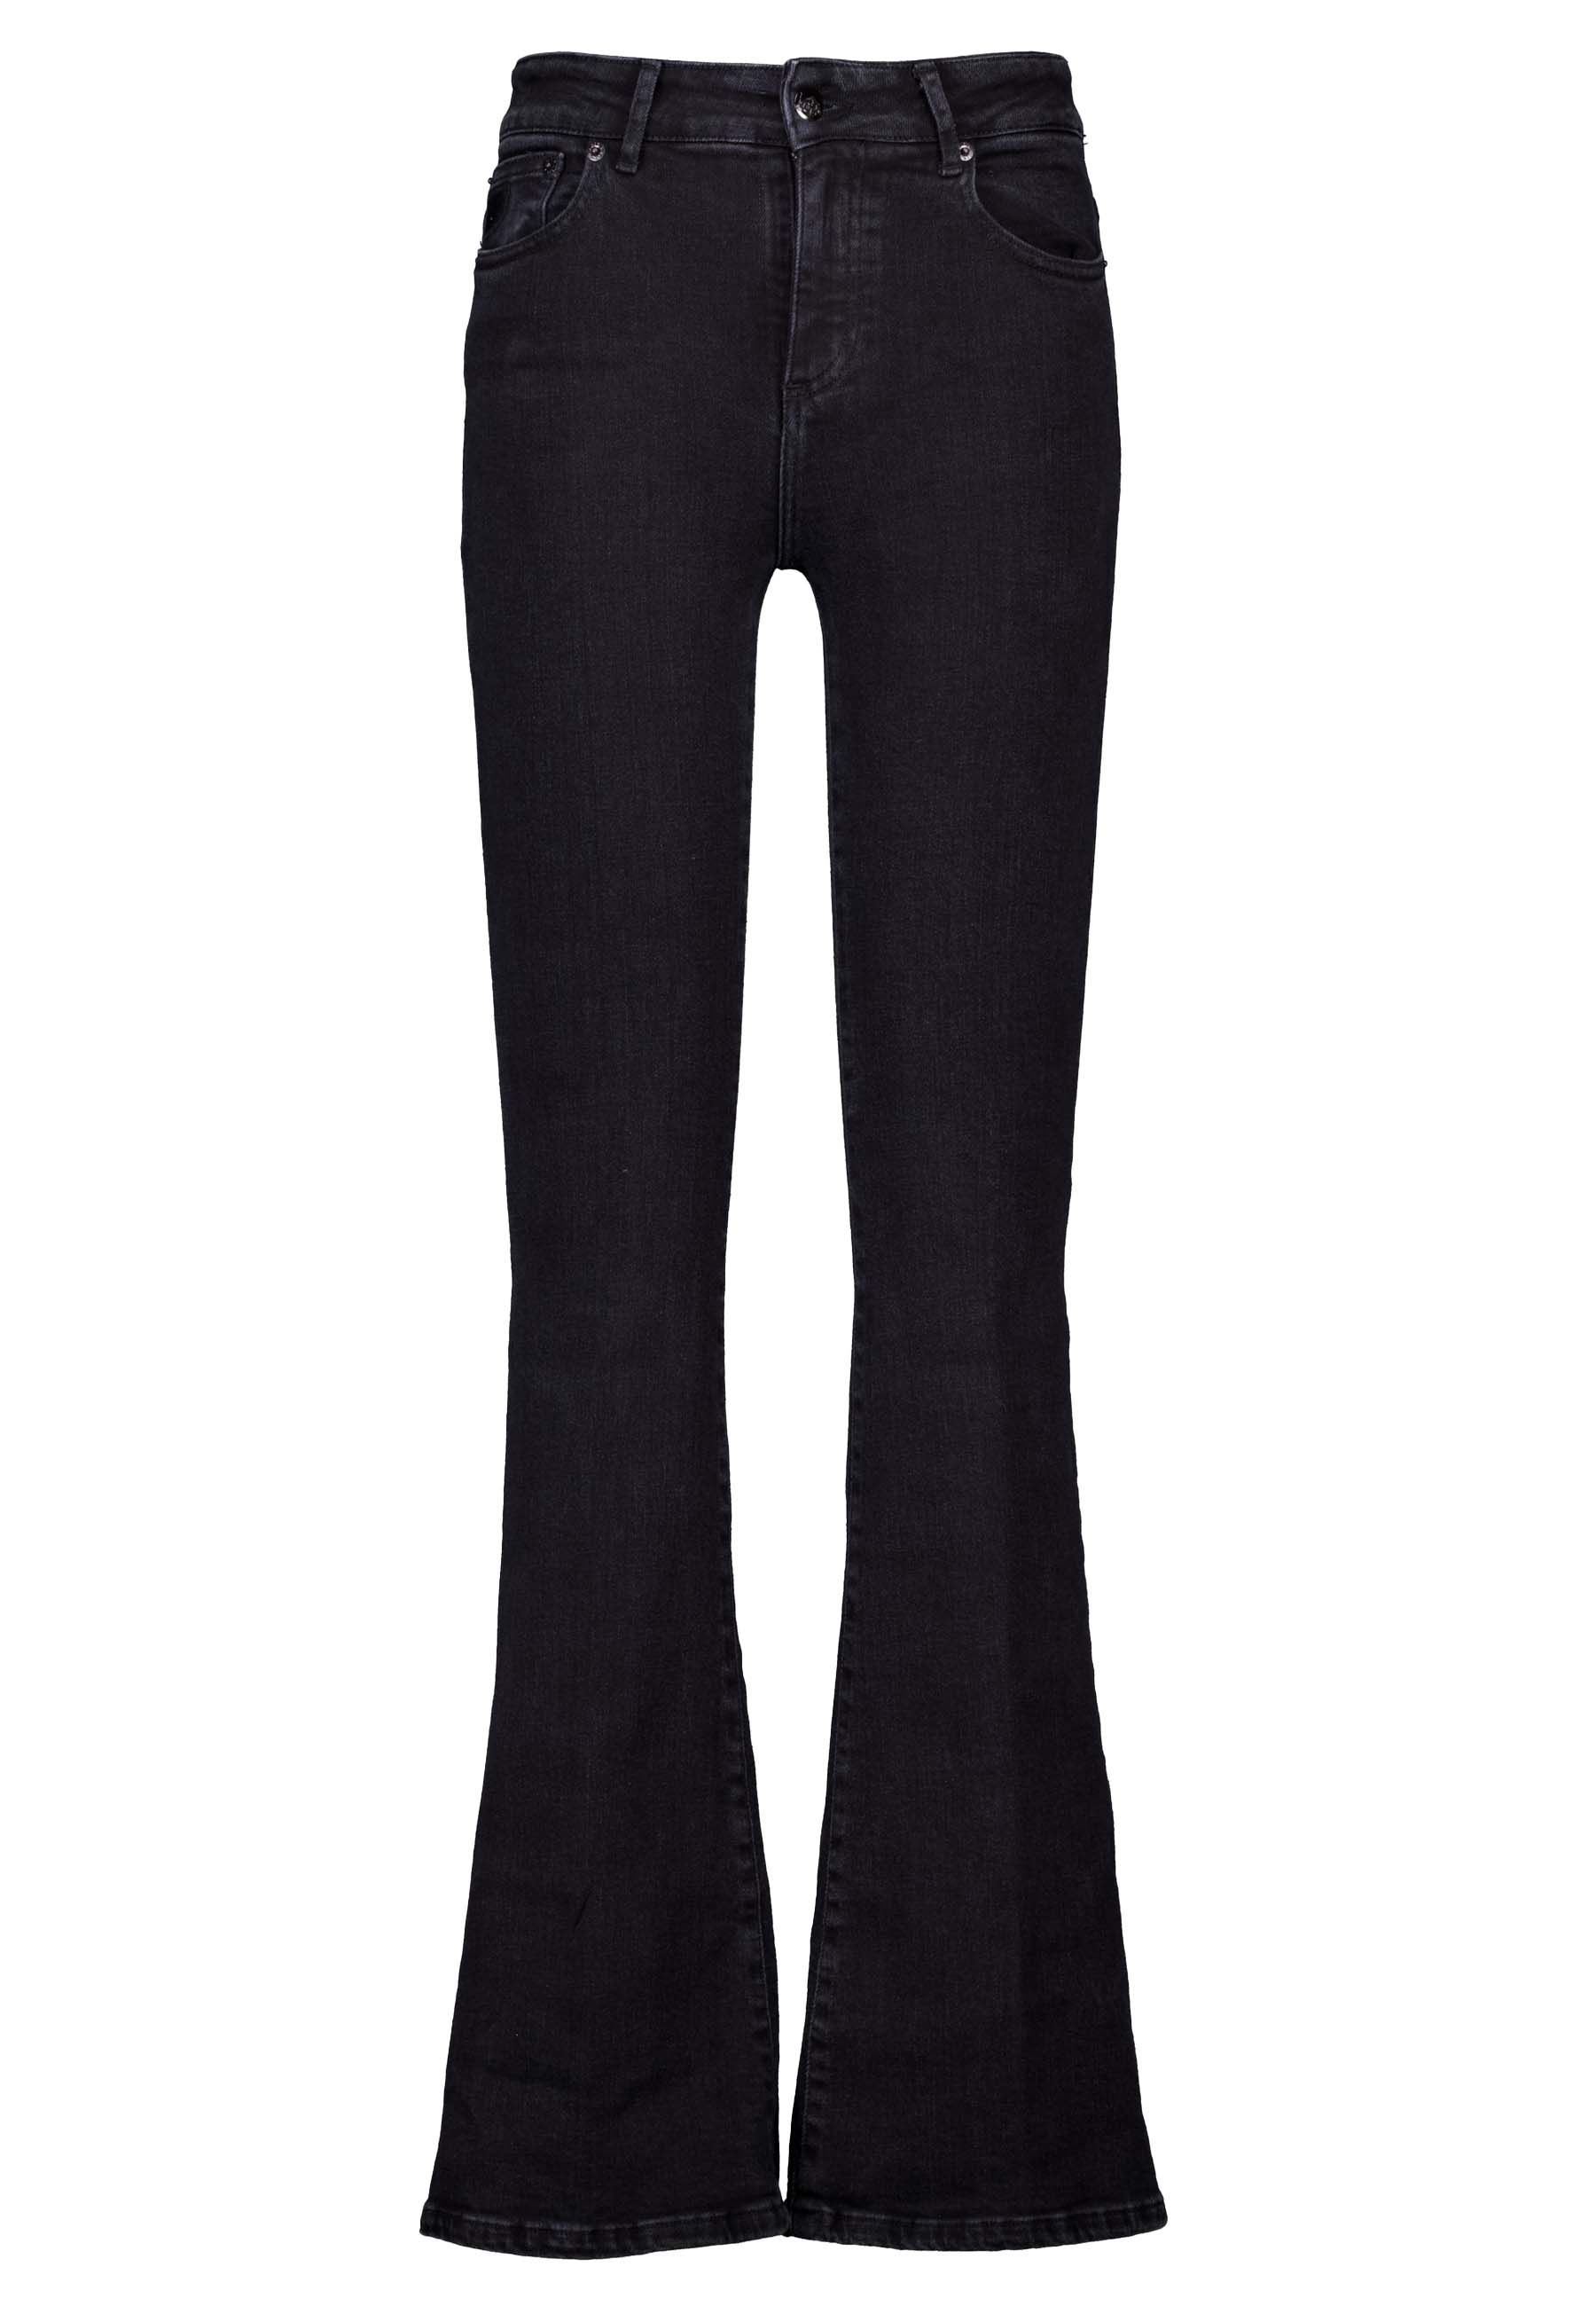 Lois Raval 16 caspar jeans zwart Dames maat 28/32